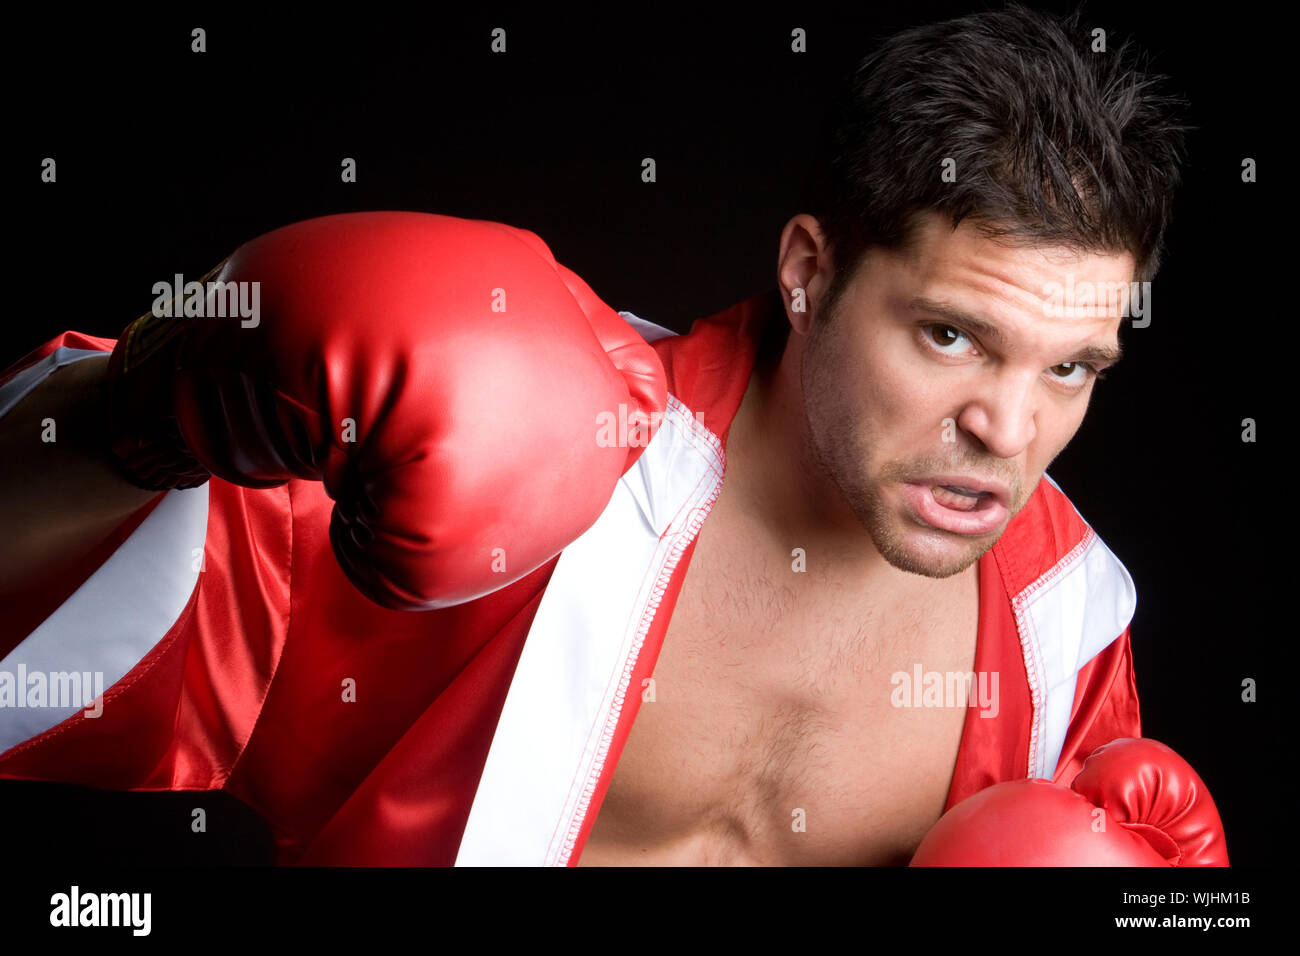 Professional boxer man punching Stock Photo